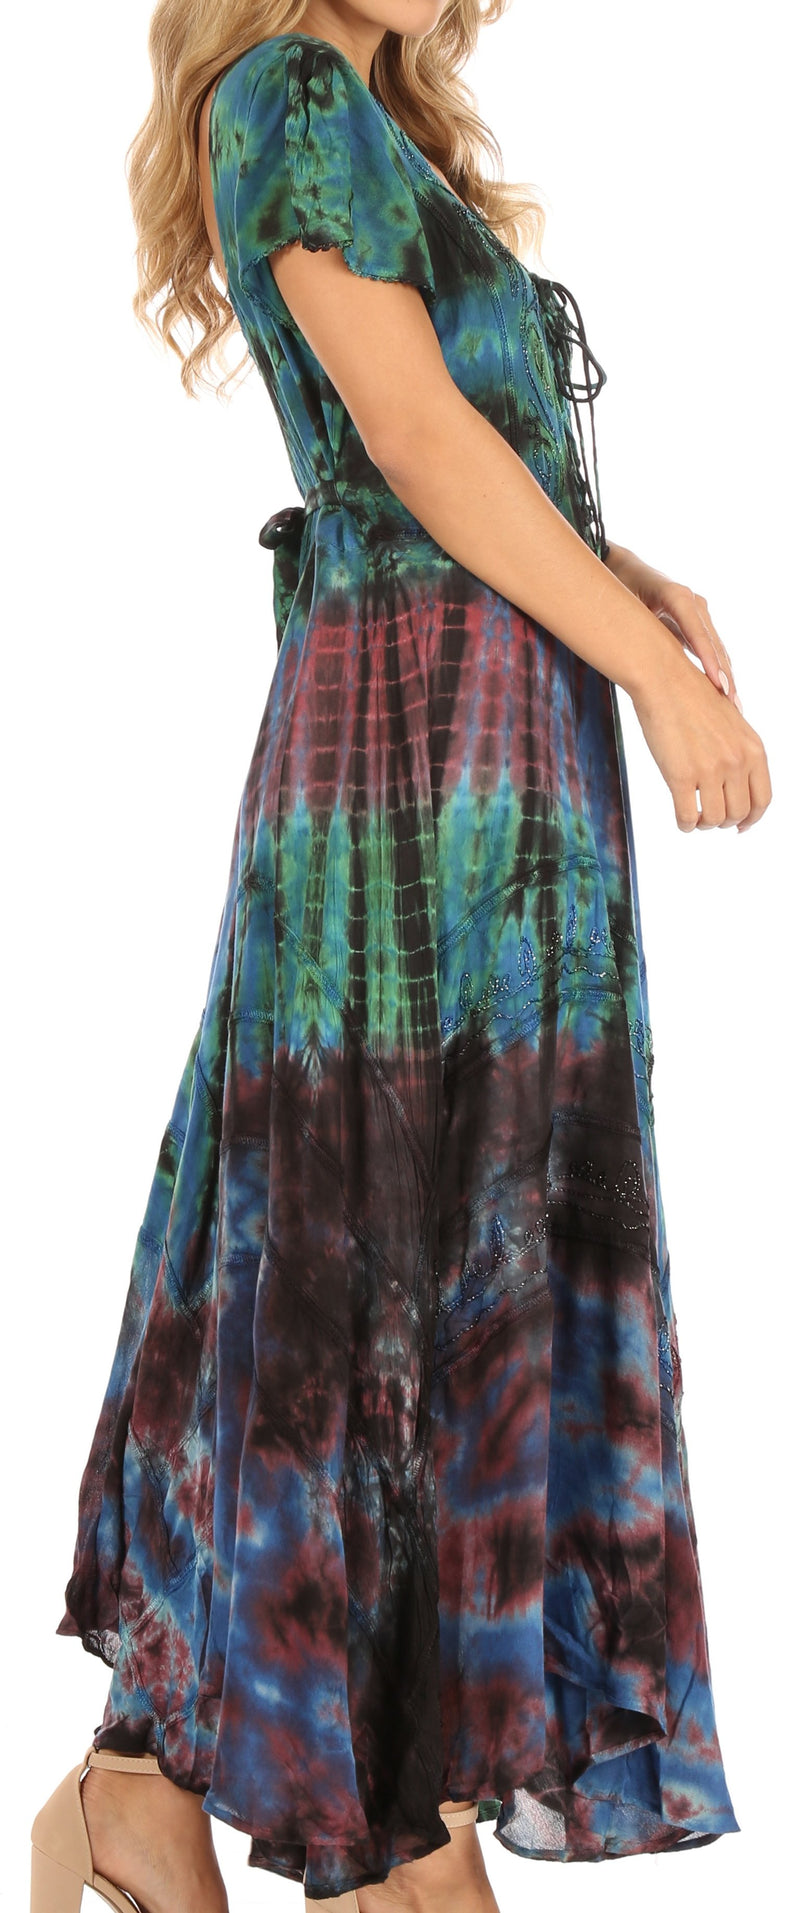 Sakkas Lia Short Sleeve Peasant Maxi Corset Tie-dye Dress with Embroidery Runs Big